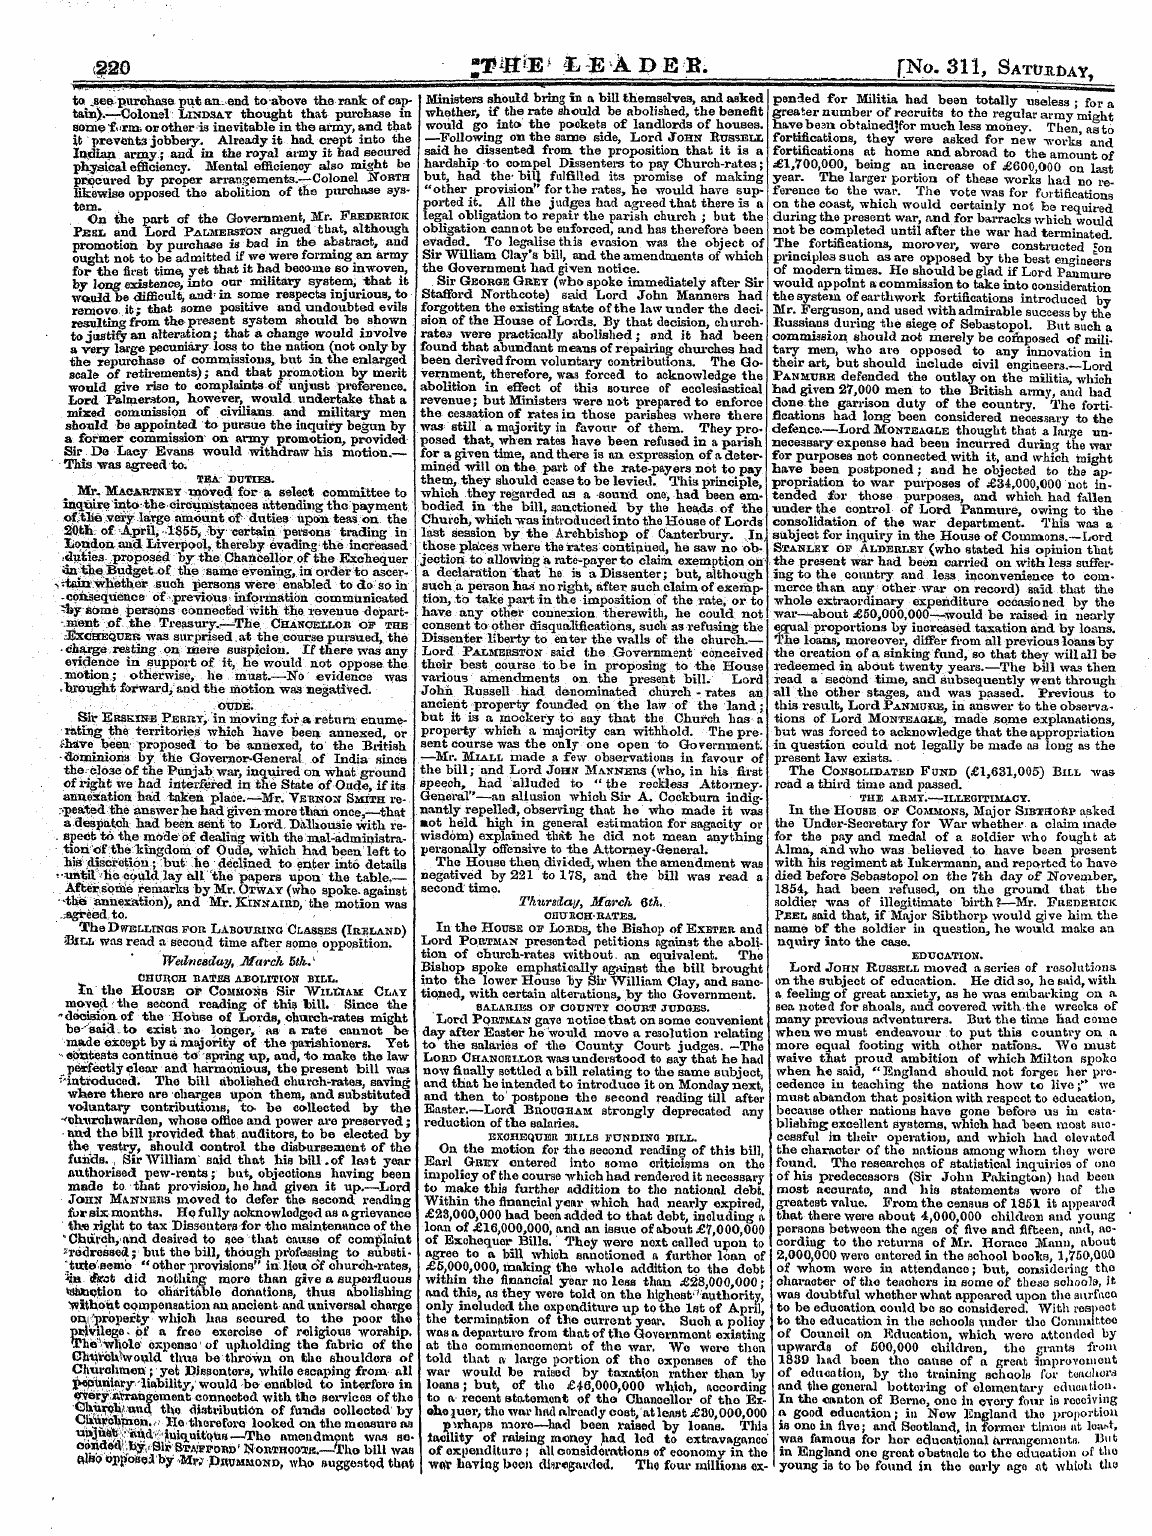 Leader (1850-1860): jS F Y, 2nd edition - _J| 20 ;Img%P &Deapeb. [No-311, Sattjitd...